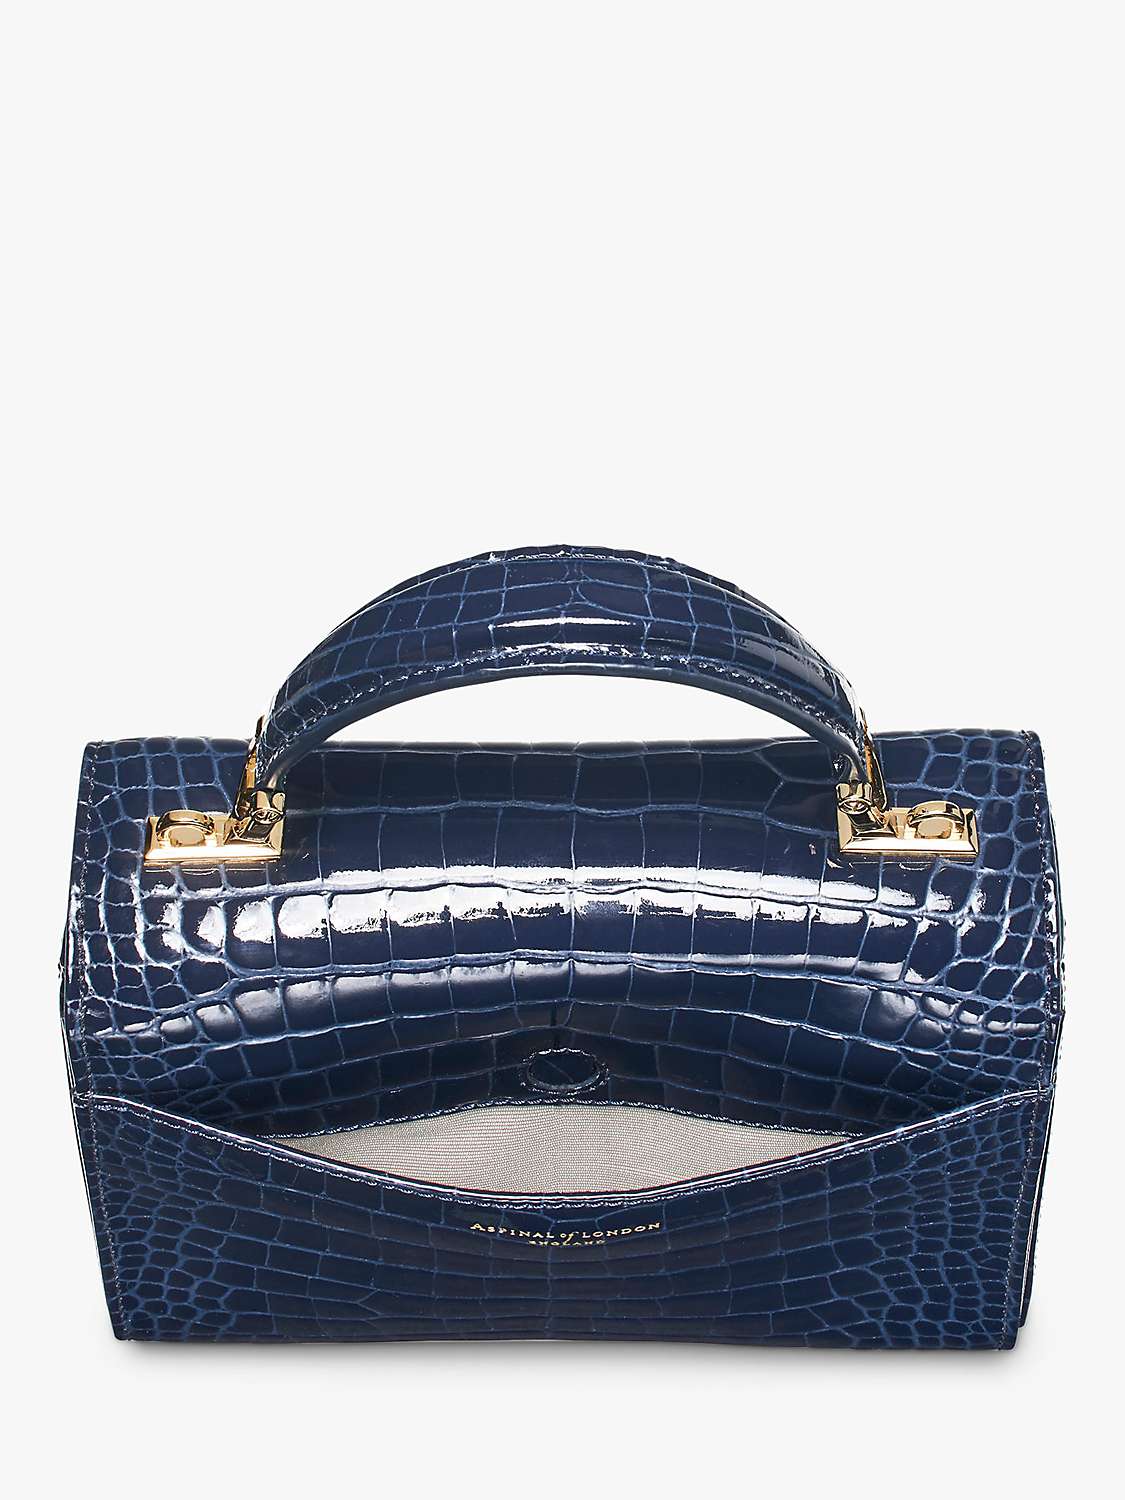 Buy Aspinal of London Mayfair Croc Leather Midi Grab Bag Online at johnlewis.com